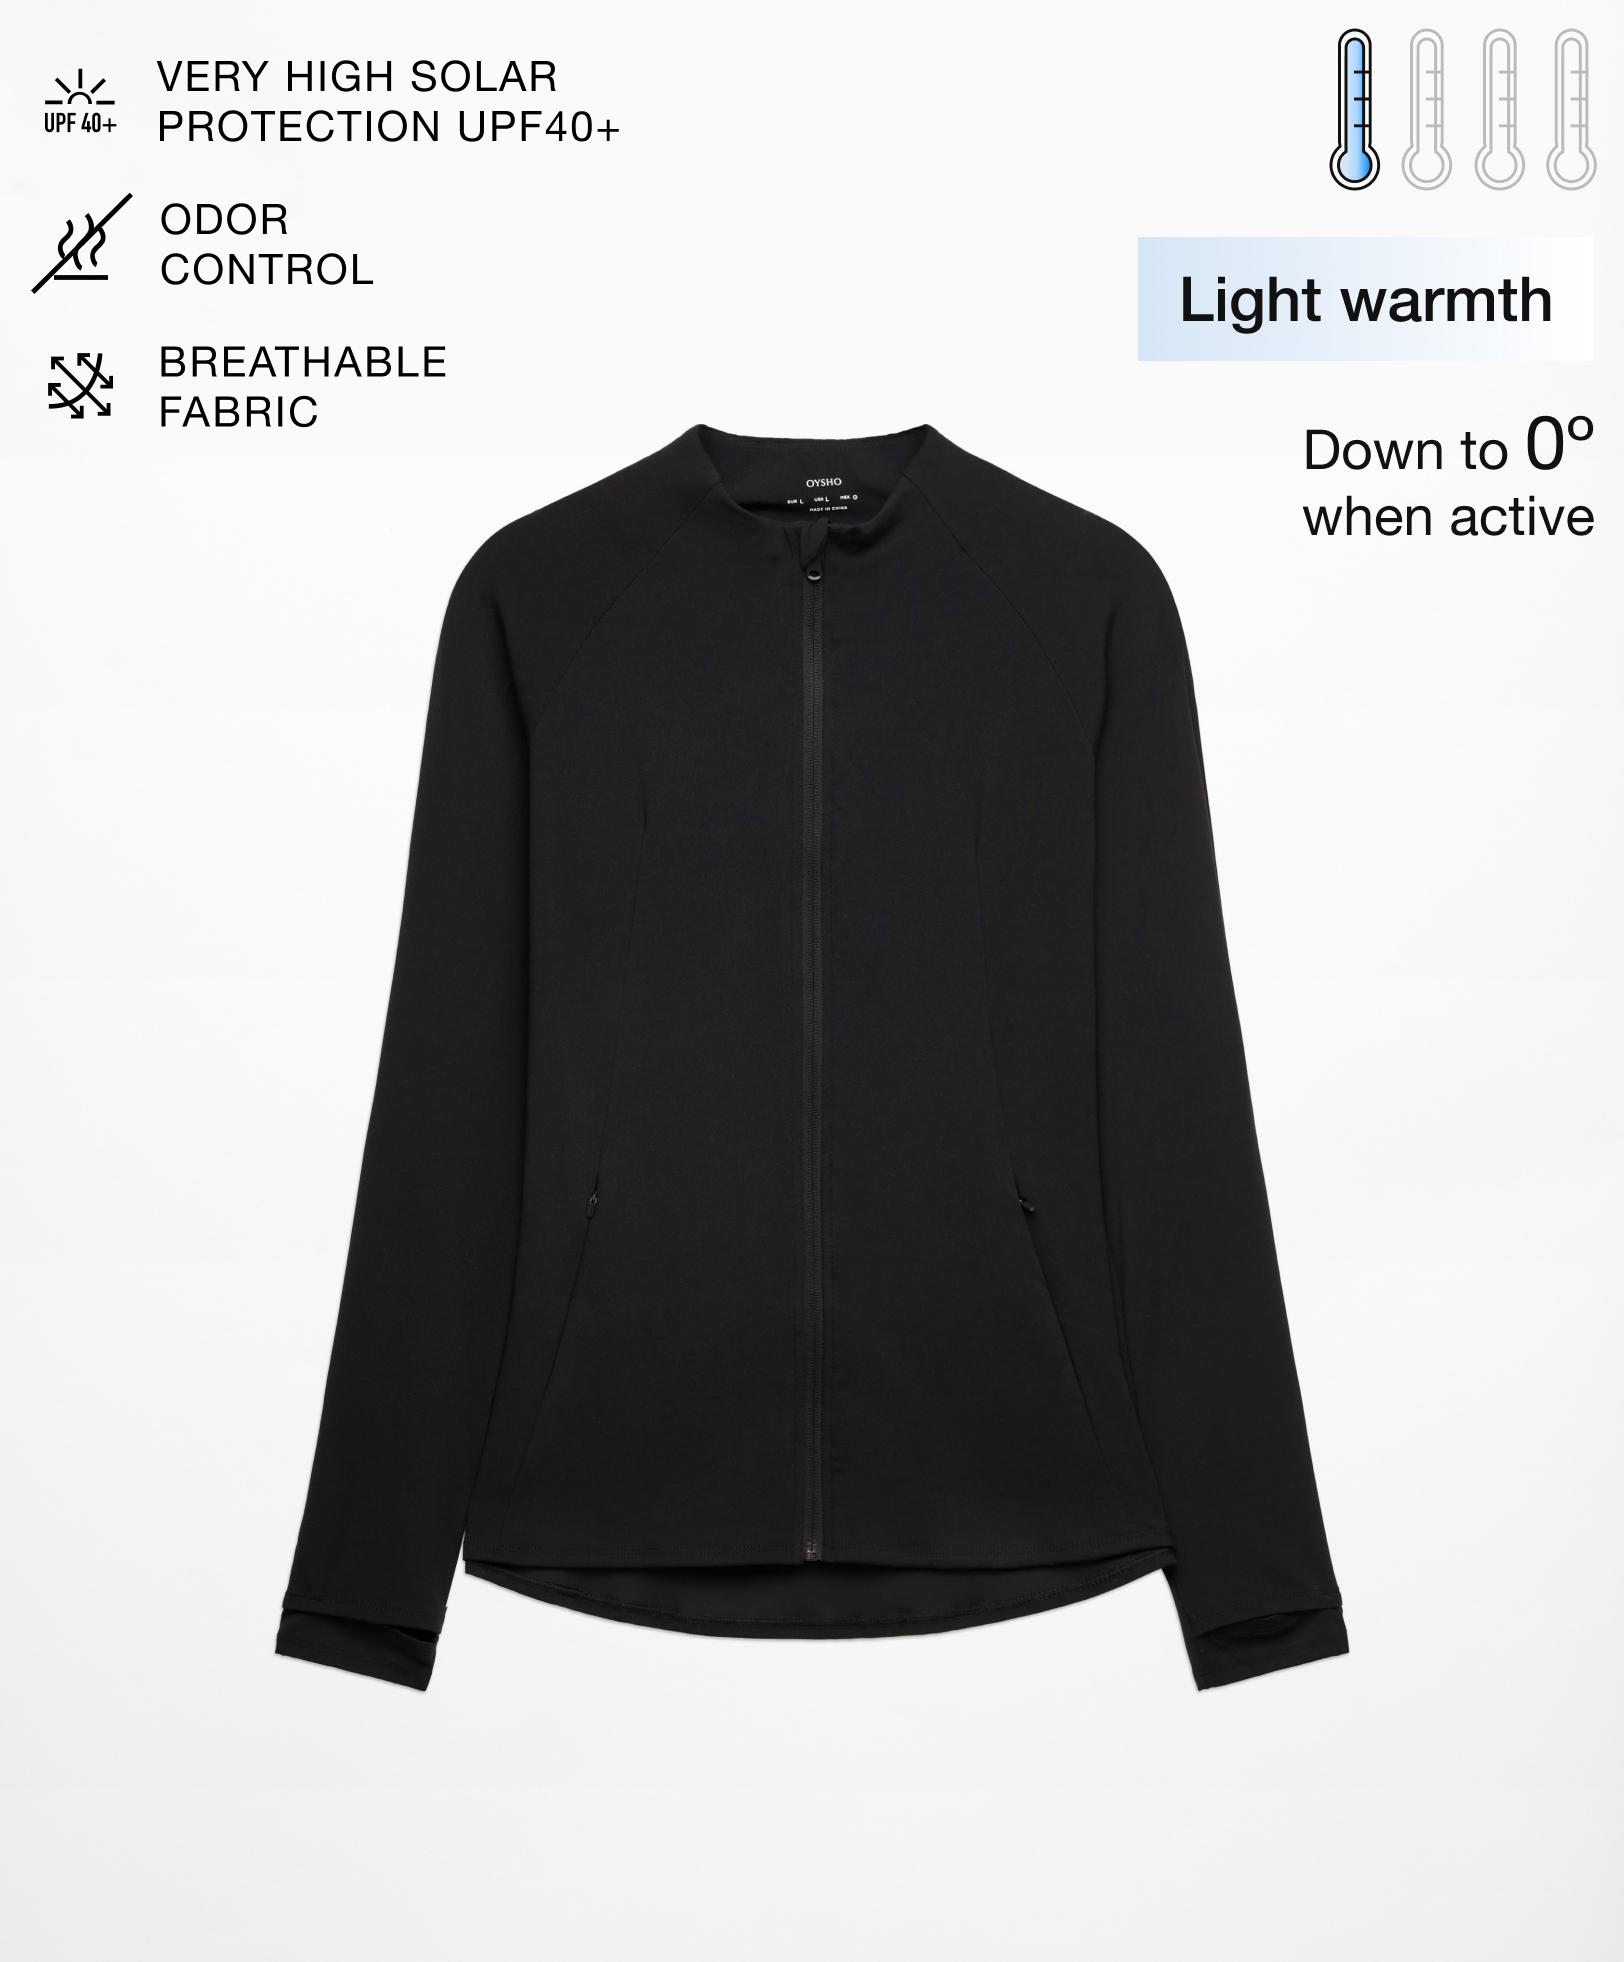 Light warmth comfortlux technical jacket